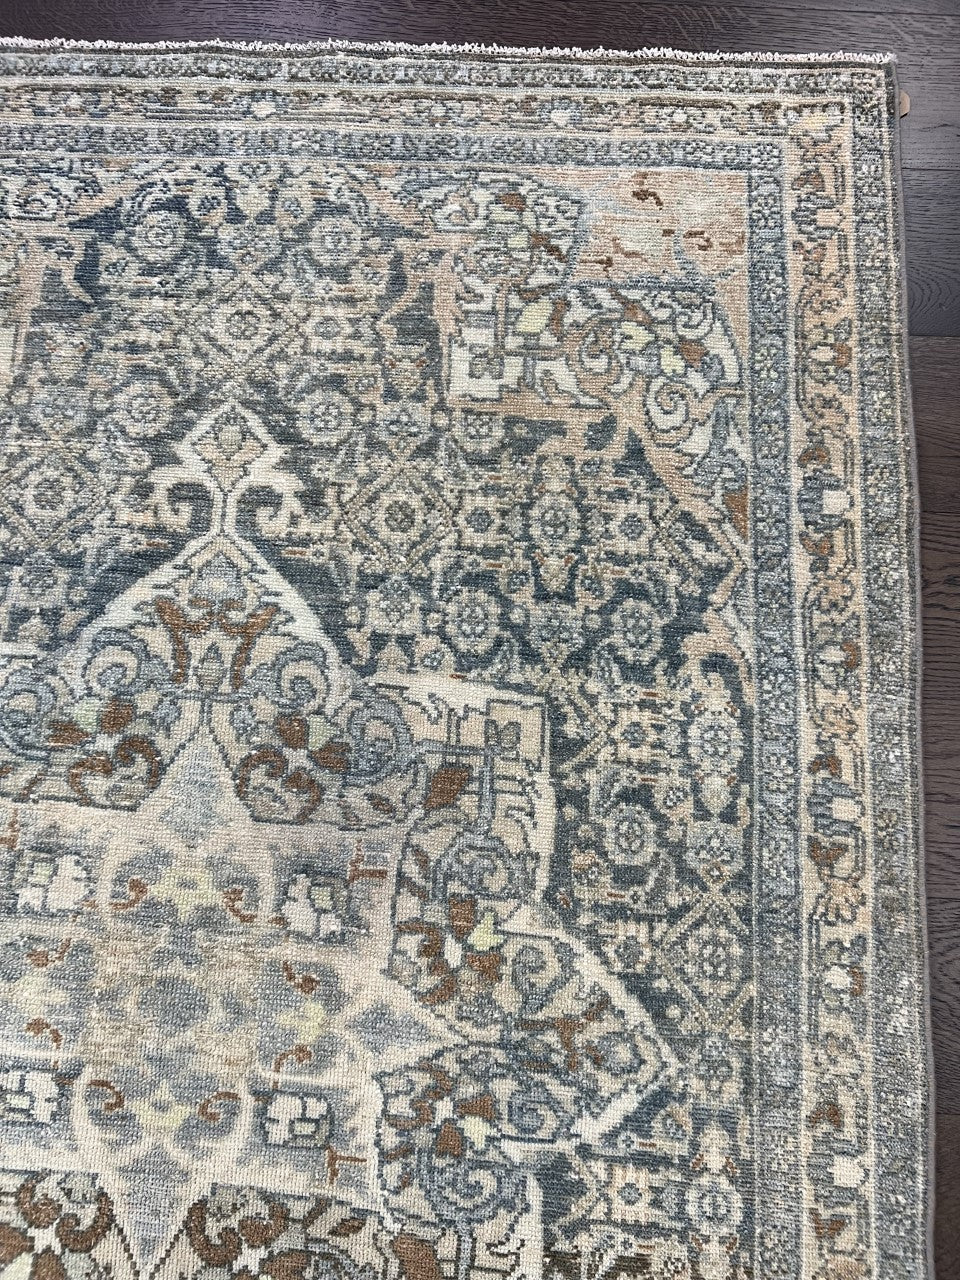 Beautiful vintage decorative Hamadan rug